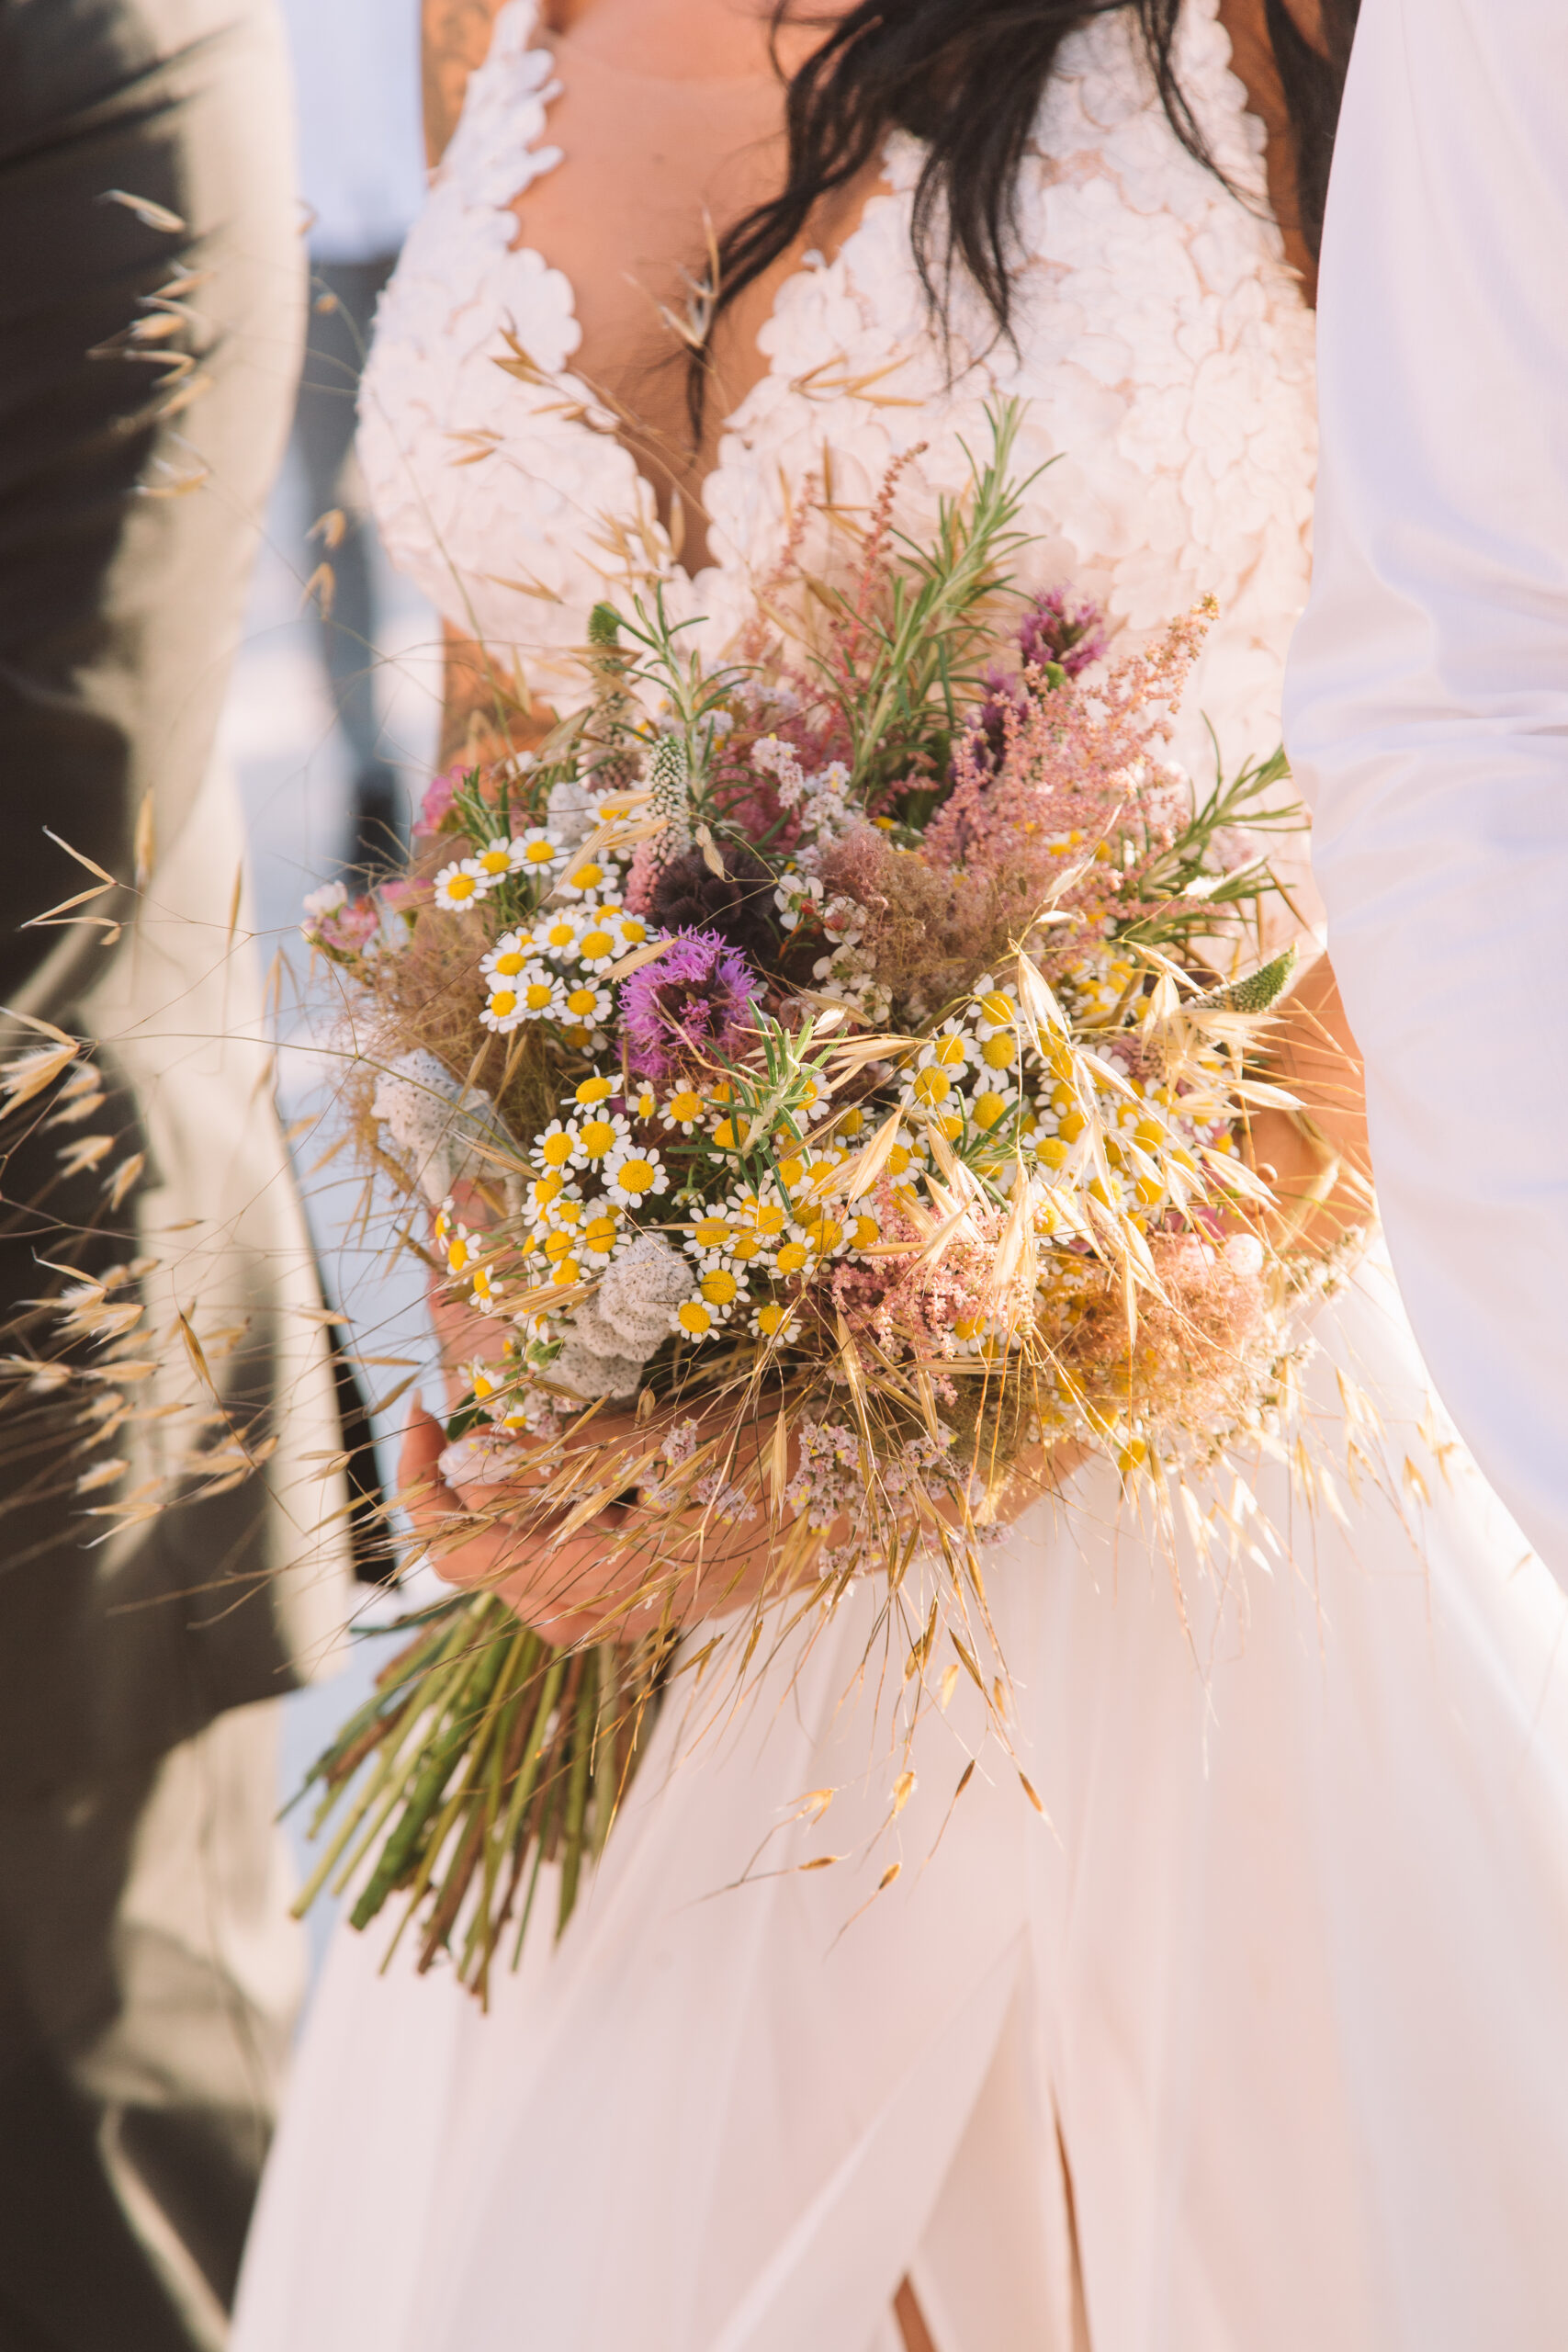 Bridal bouquet Athens riviera wedding νυφική ανθοδέσμη μπουκέτο γάμου στην Αθηναϊκή ριβιέρα